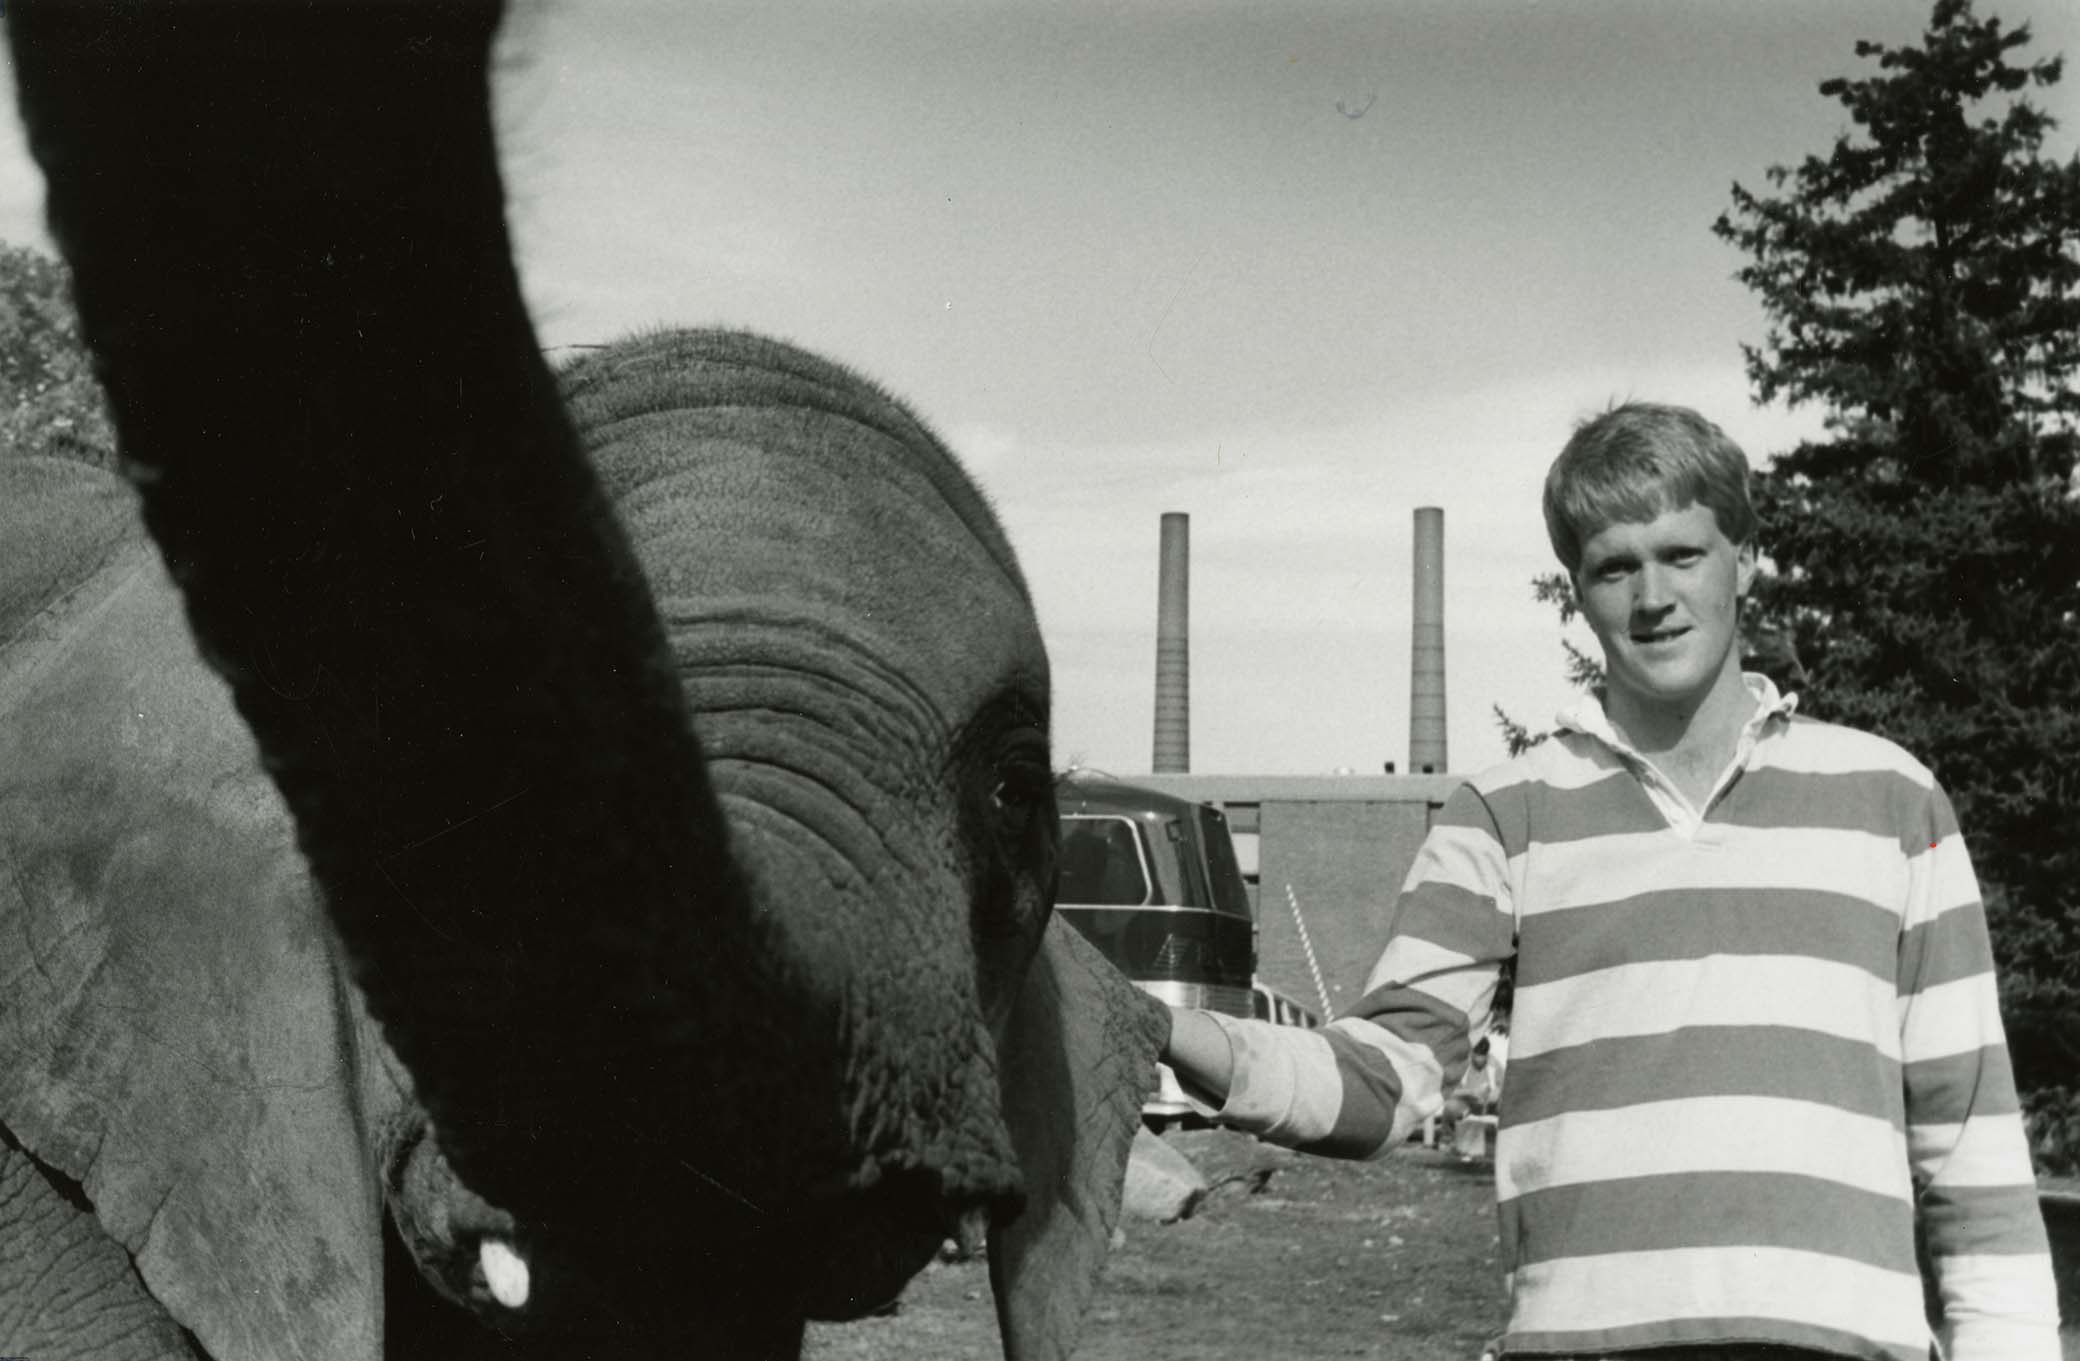 UConn student with an elephant (Jorgensen Circus Royal), October 17, 1987